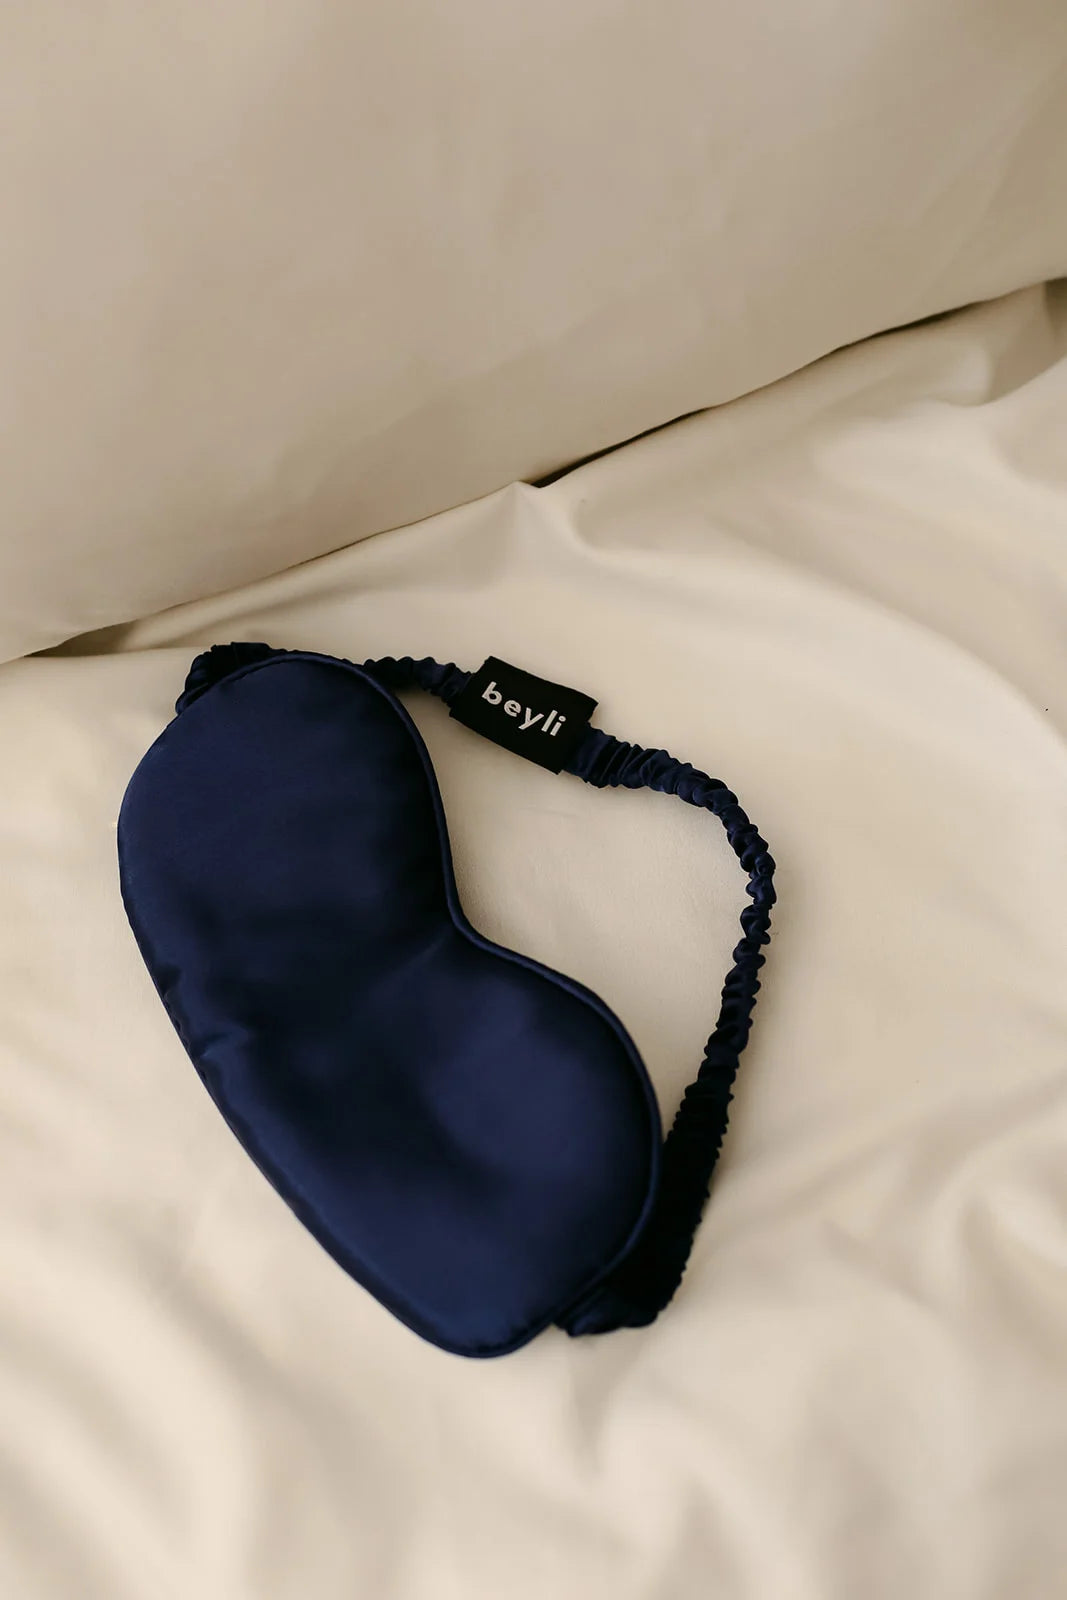 A single blue memory foam eye mask designed for sleep on a white pillow